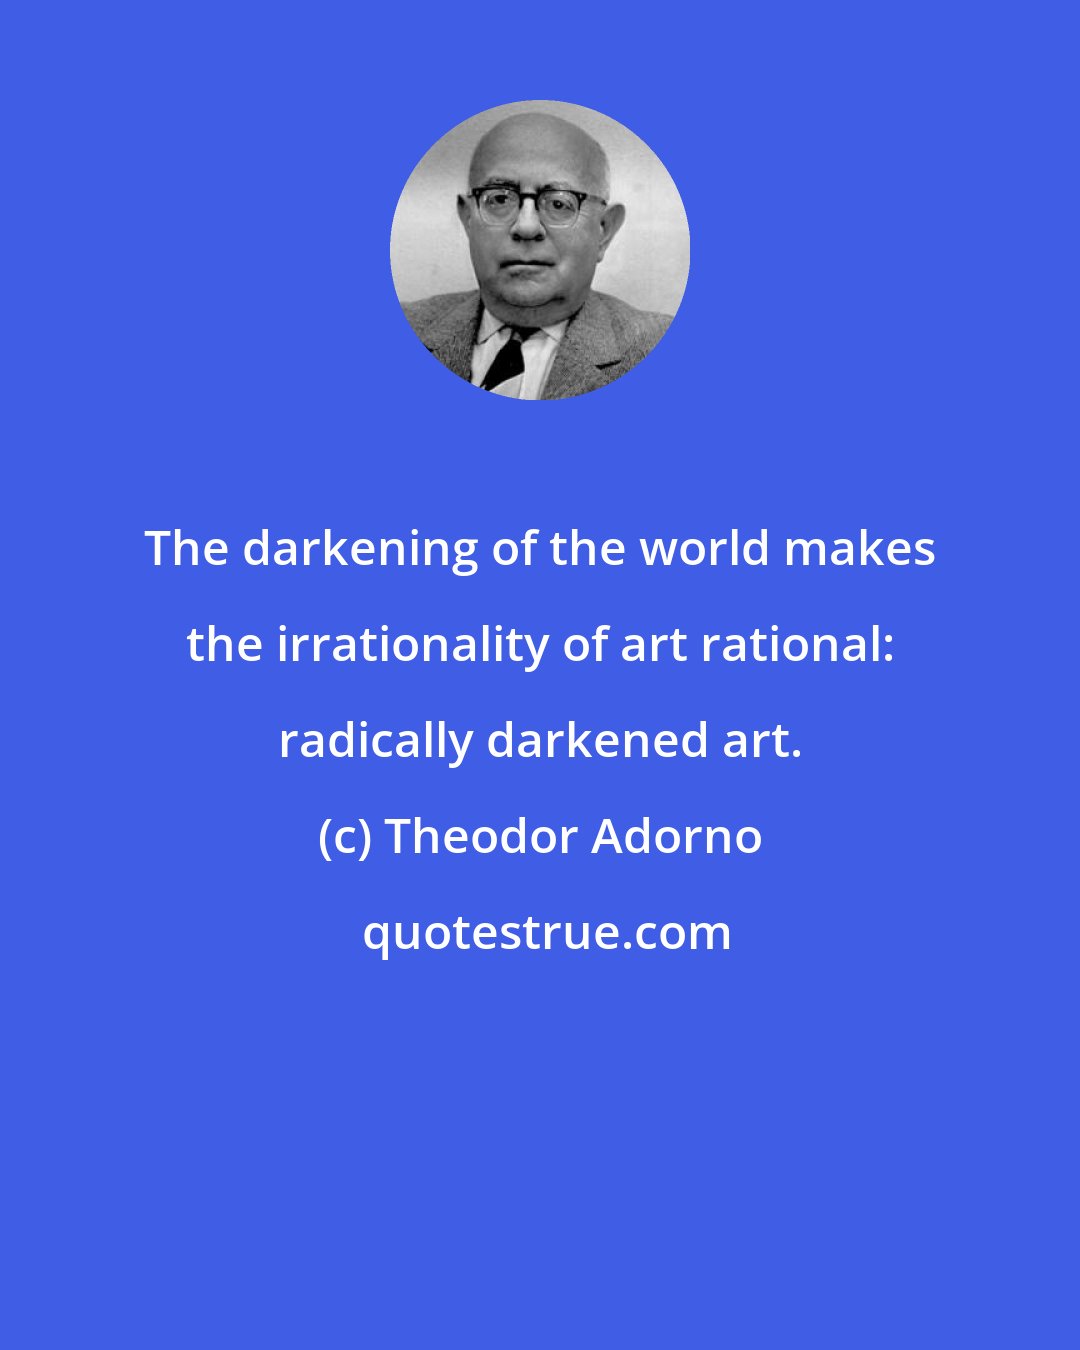 Theodor Adorno: The darkening of the world makes the irrationality of art rational: radically darkened art.